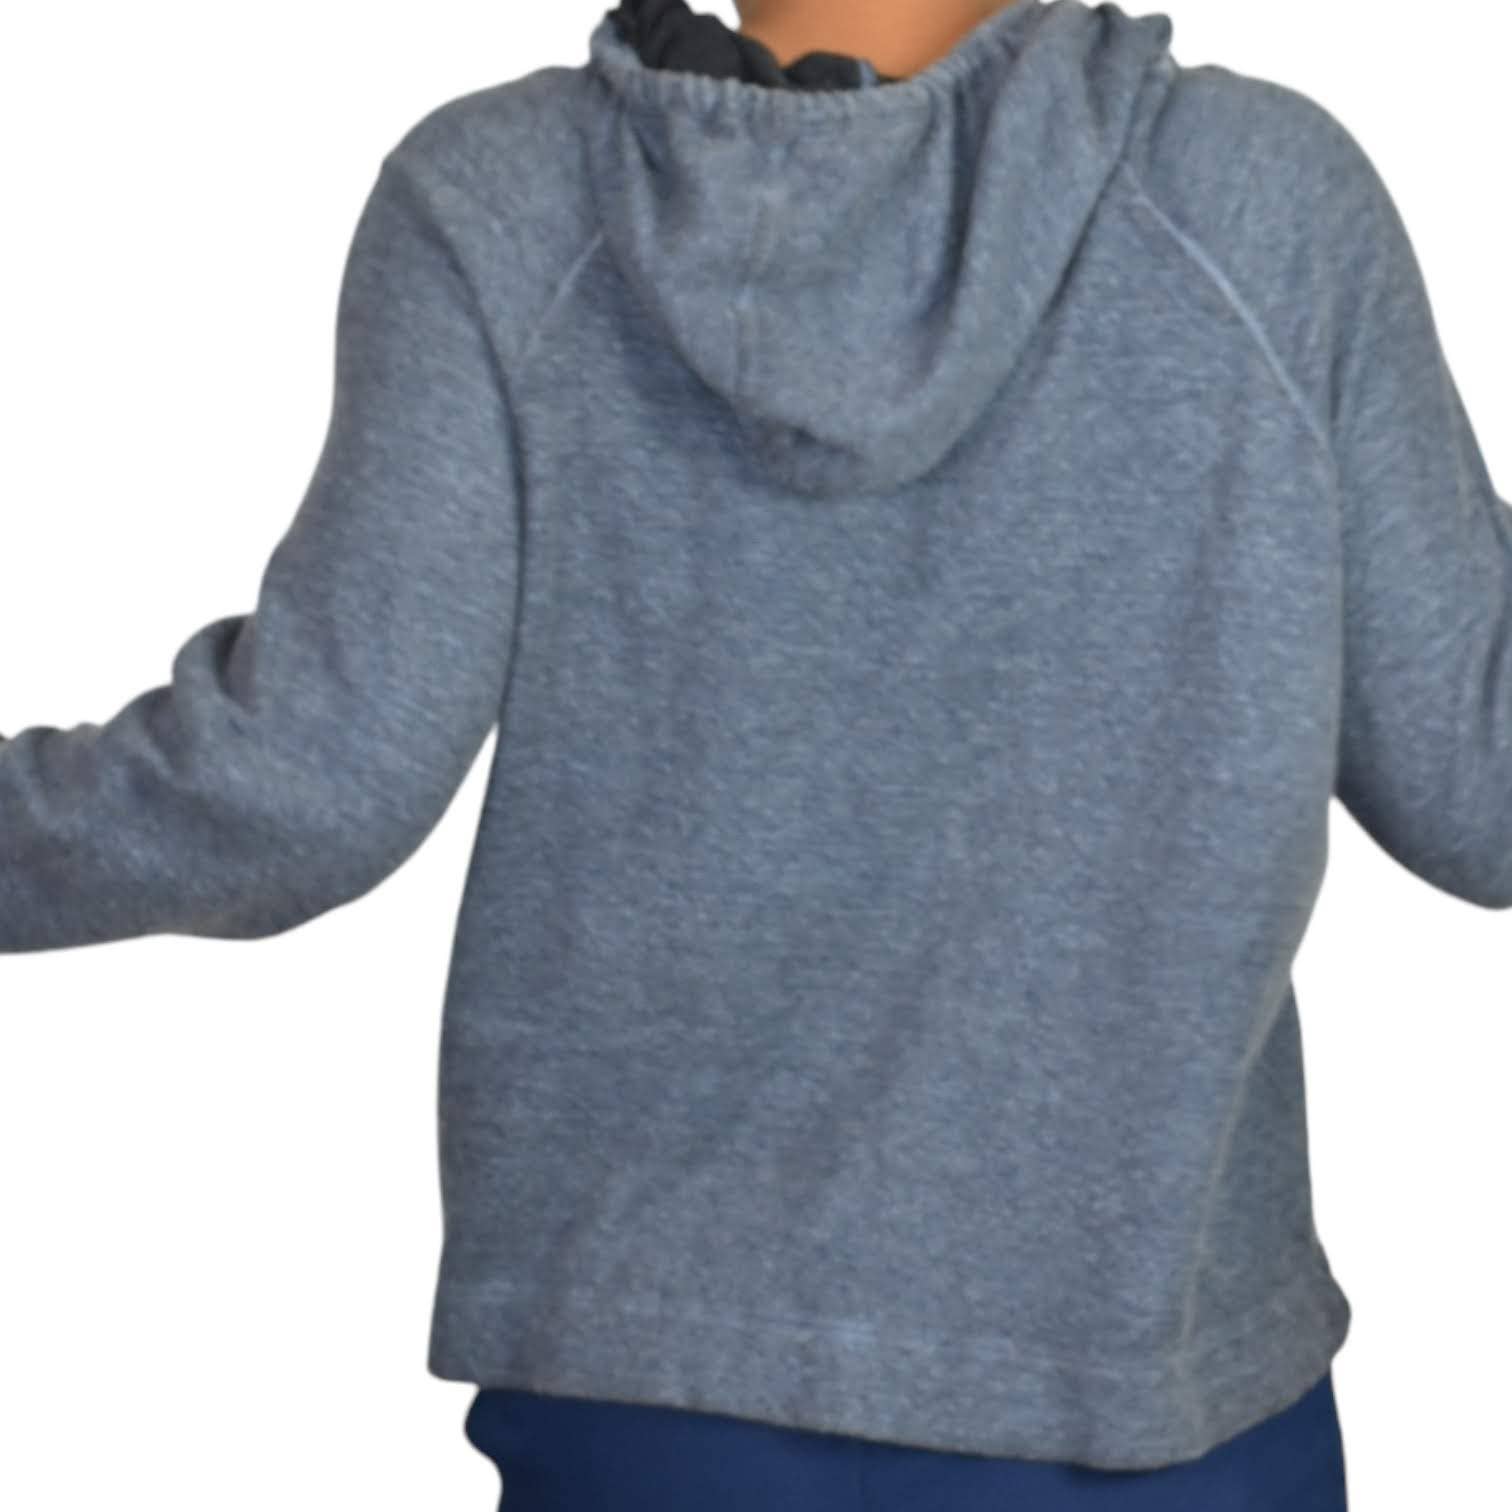 Majestic Filatures Hoodie Blue Cashmere Sweatshirt Top Long Sleeves Hood Size XL